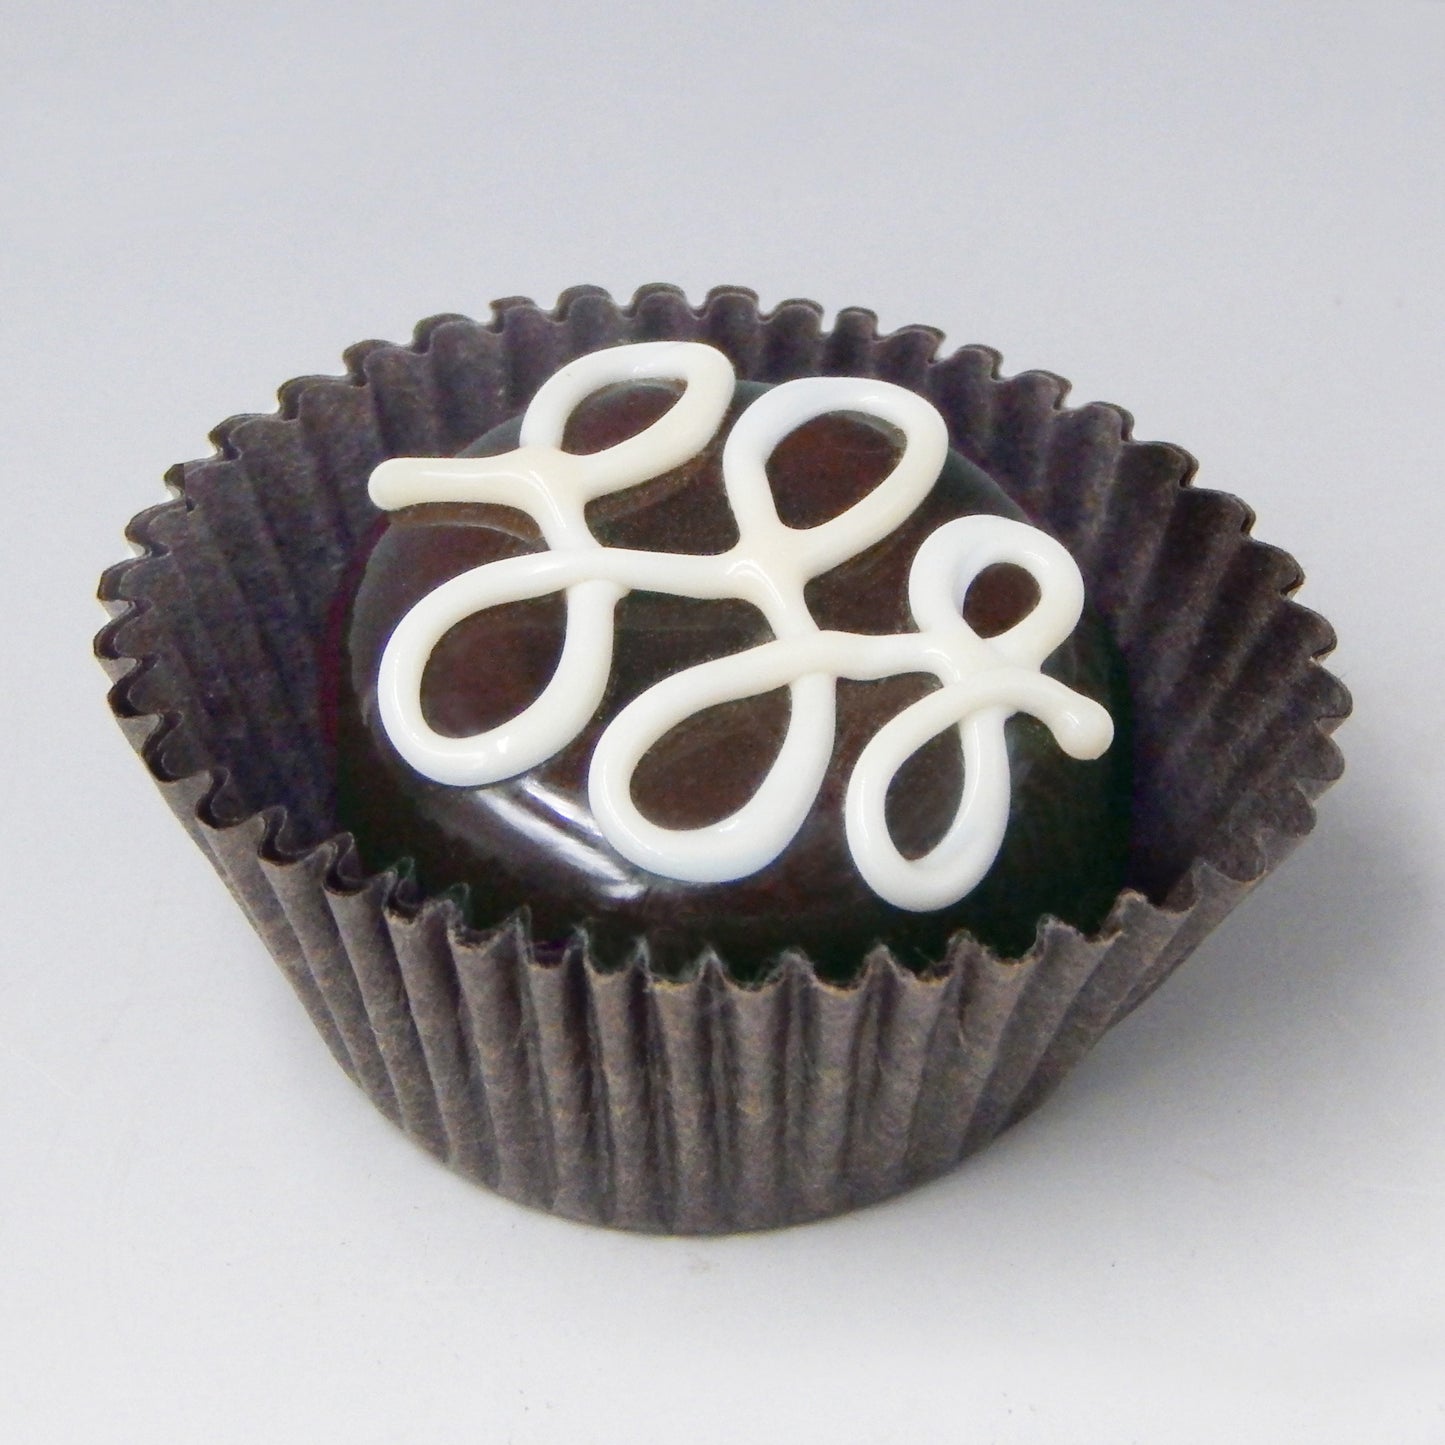 Chocolate Treat with Loop Design (16-040+)